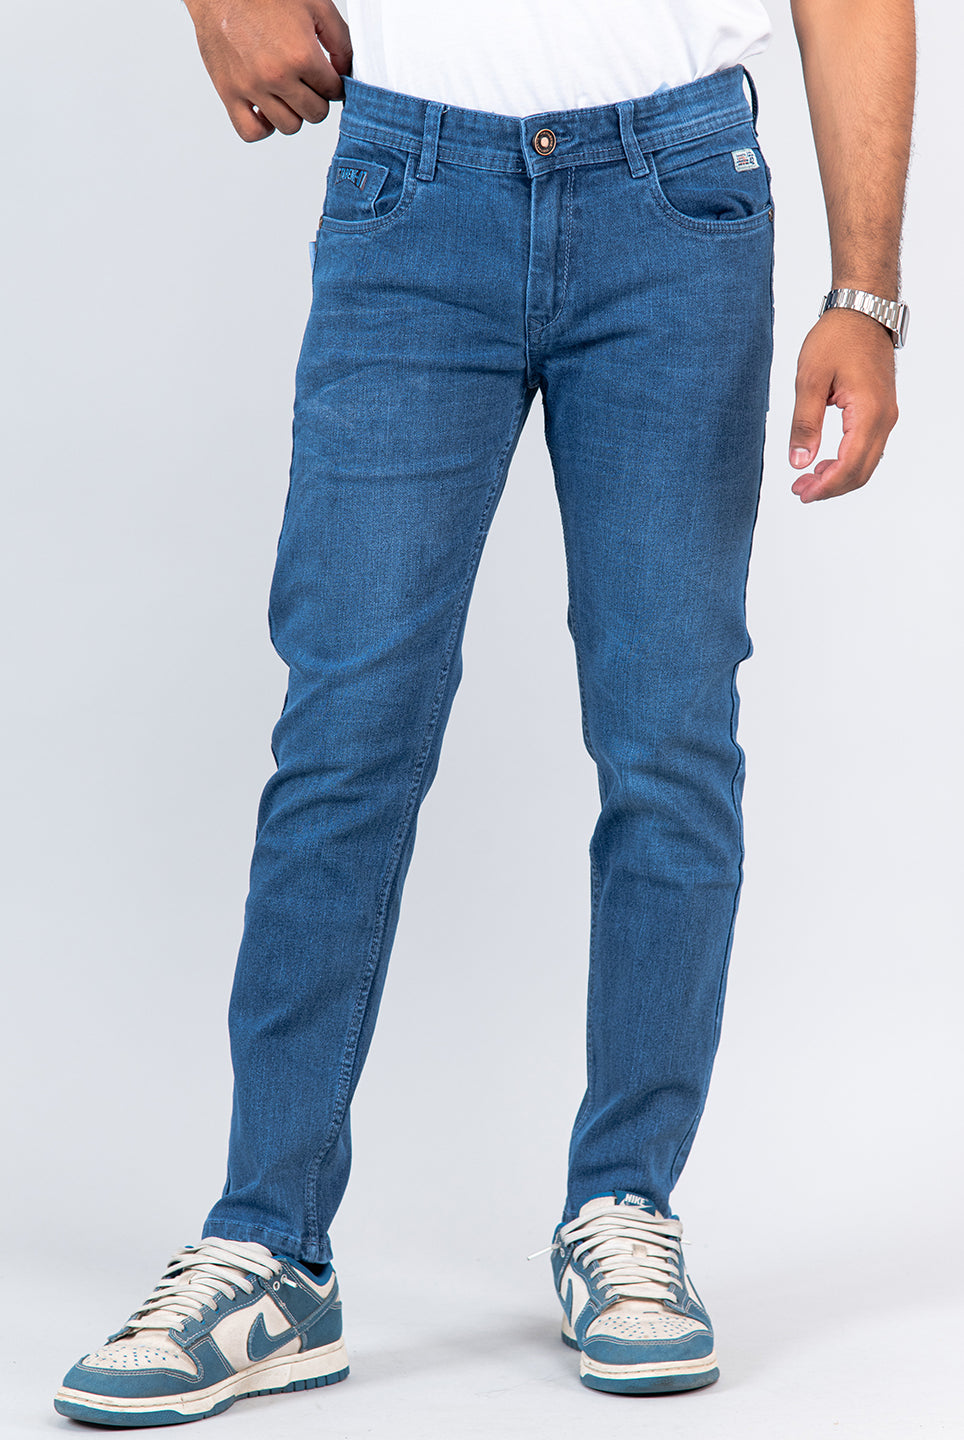 Light blue denim jeans